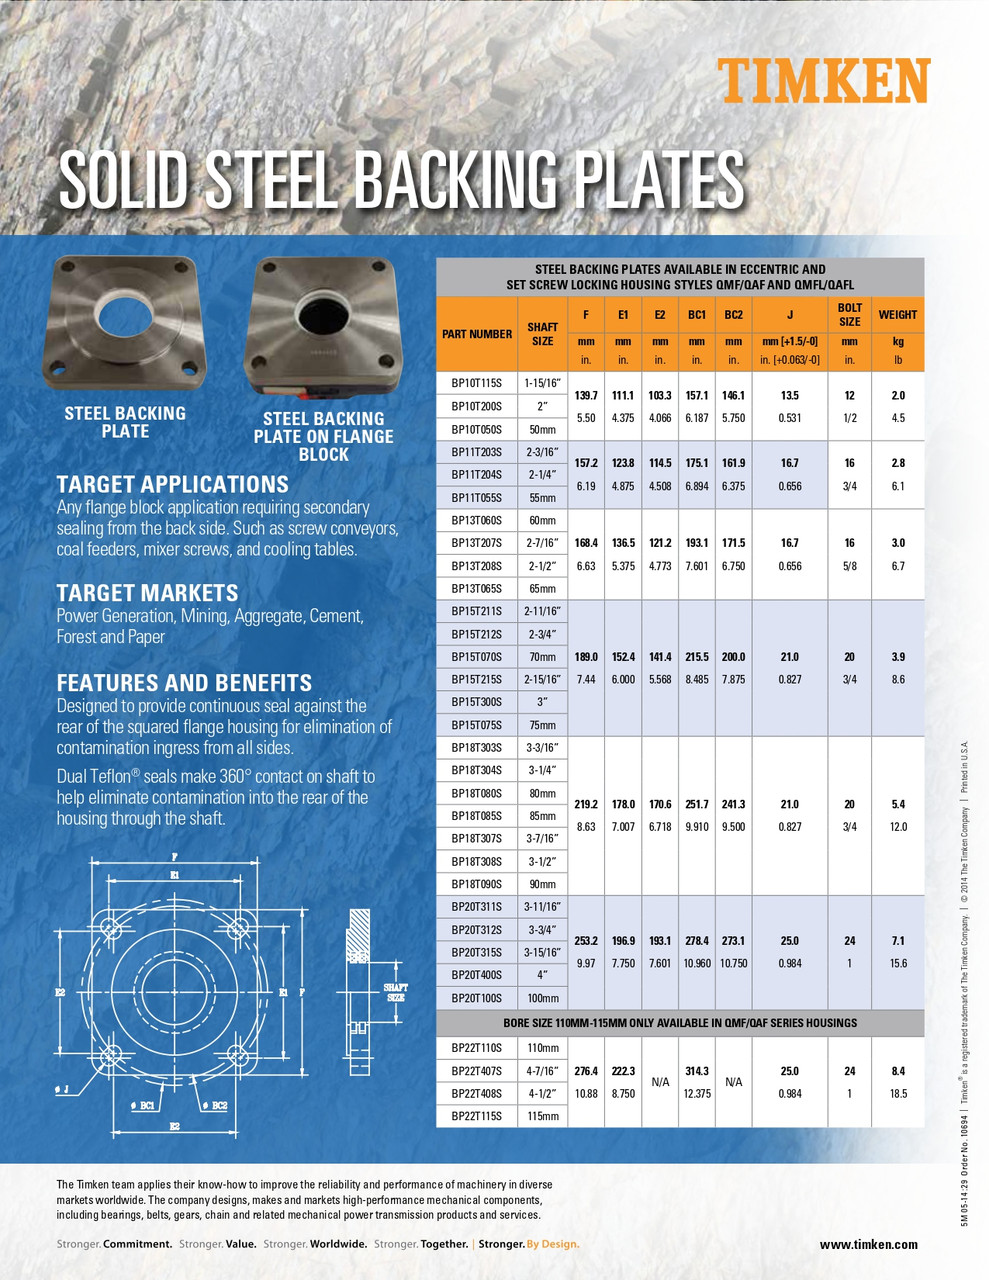 65mm Timken SRB Square Flange Backing Plate w/Dual Teflon Seals  BP13T065S